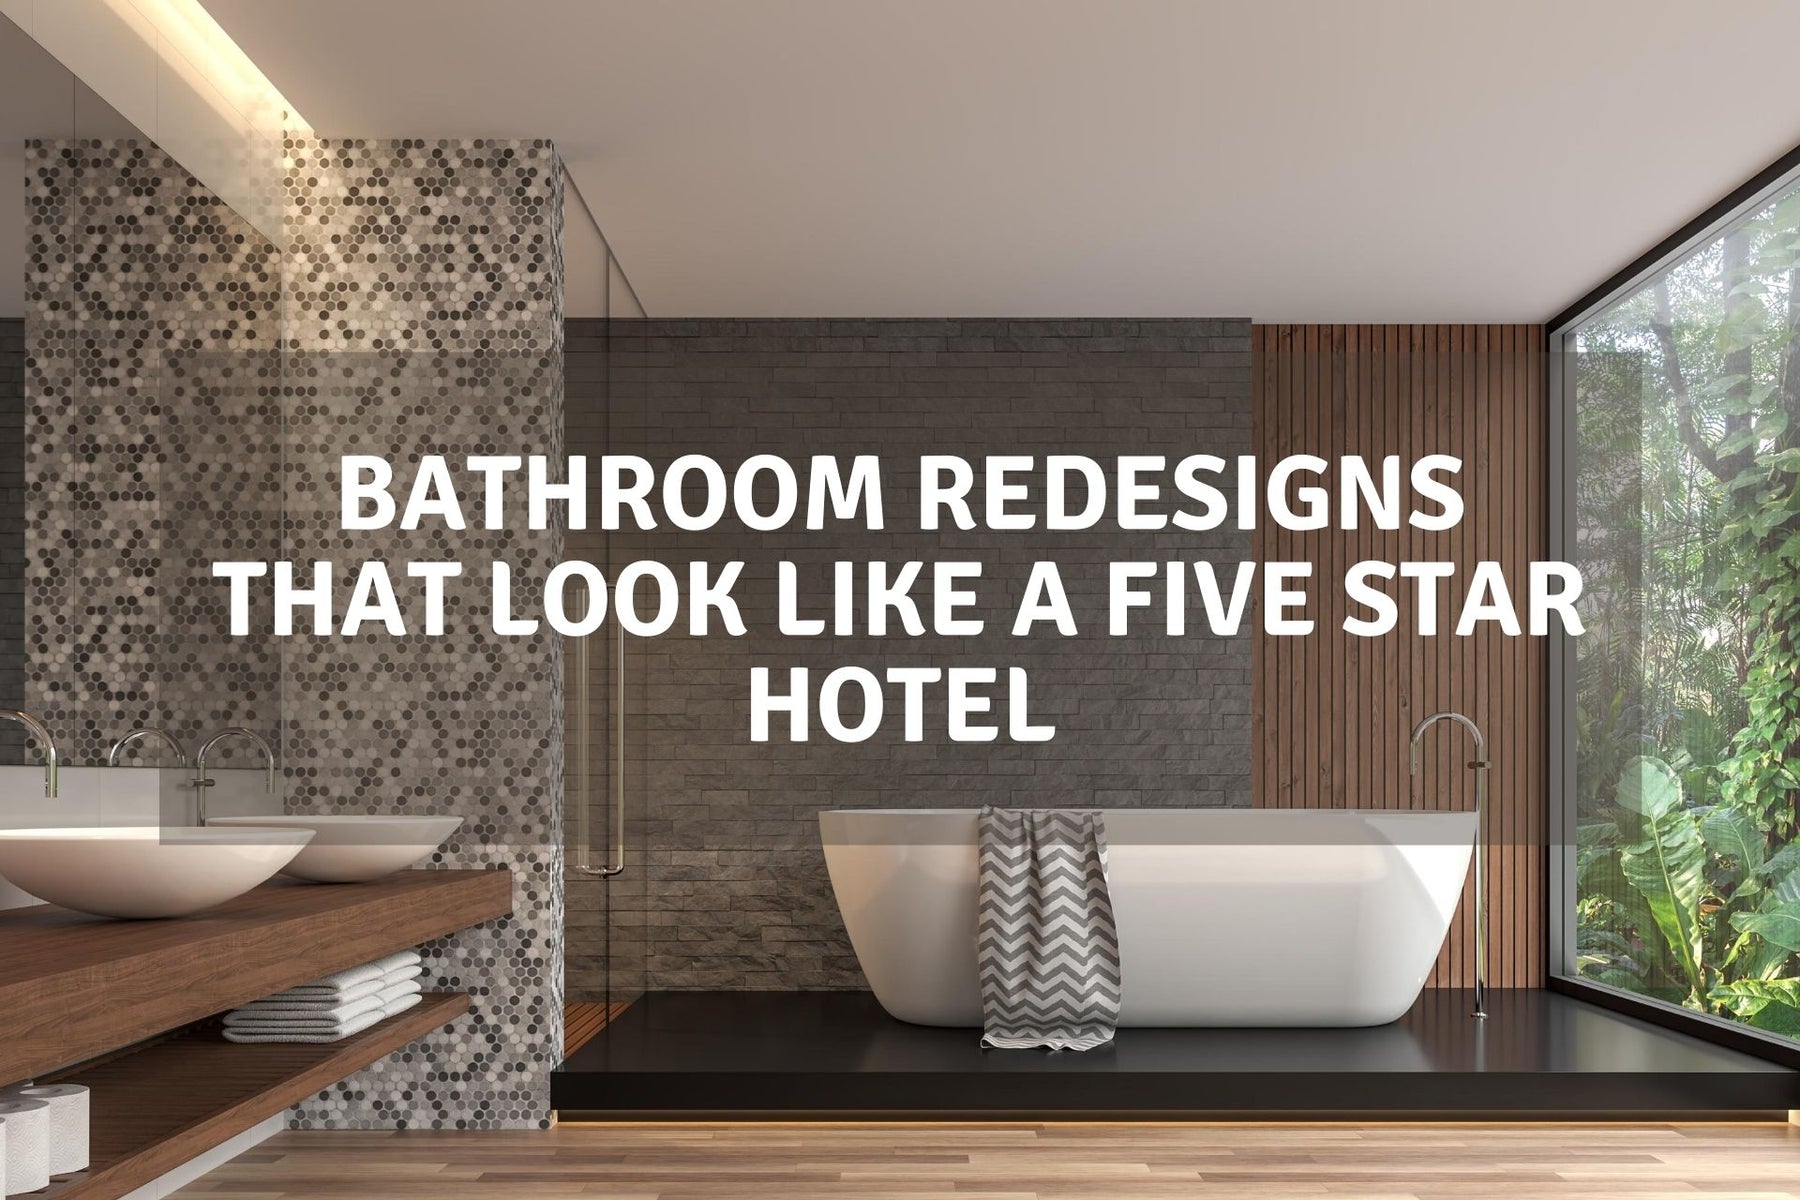 Bathroom redesign ideas